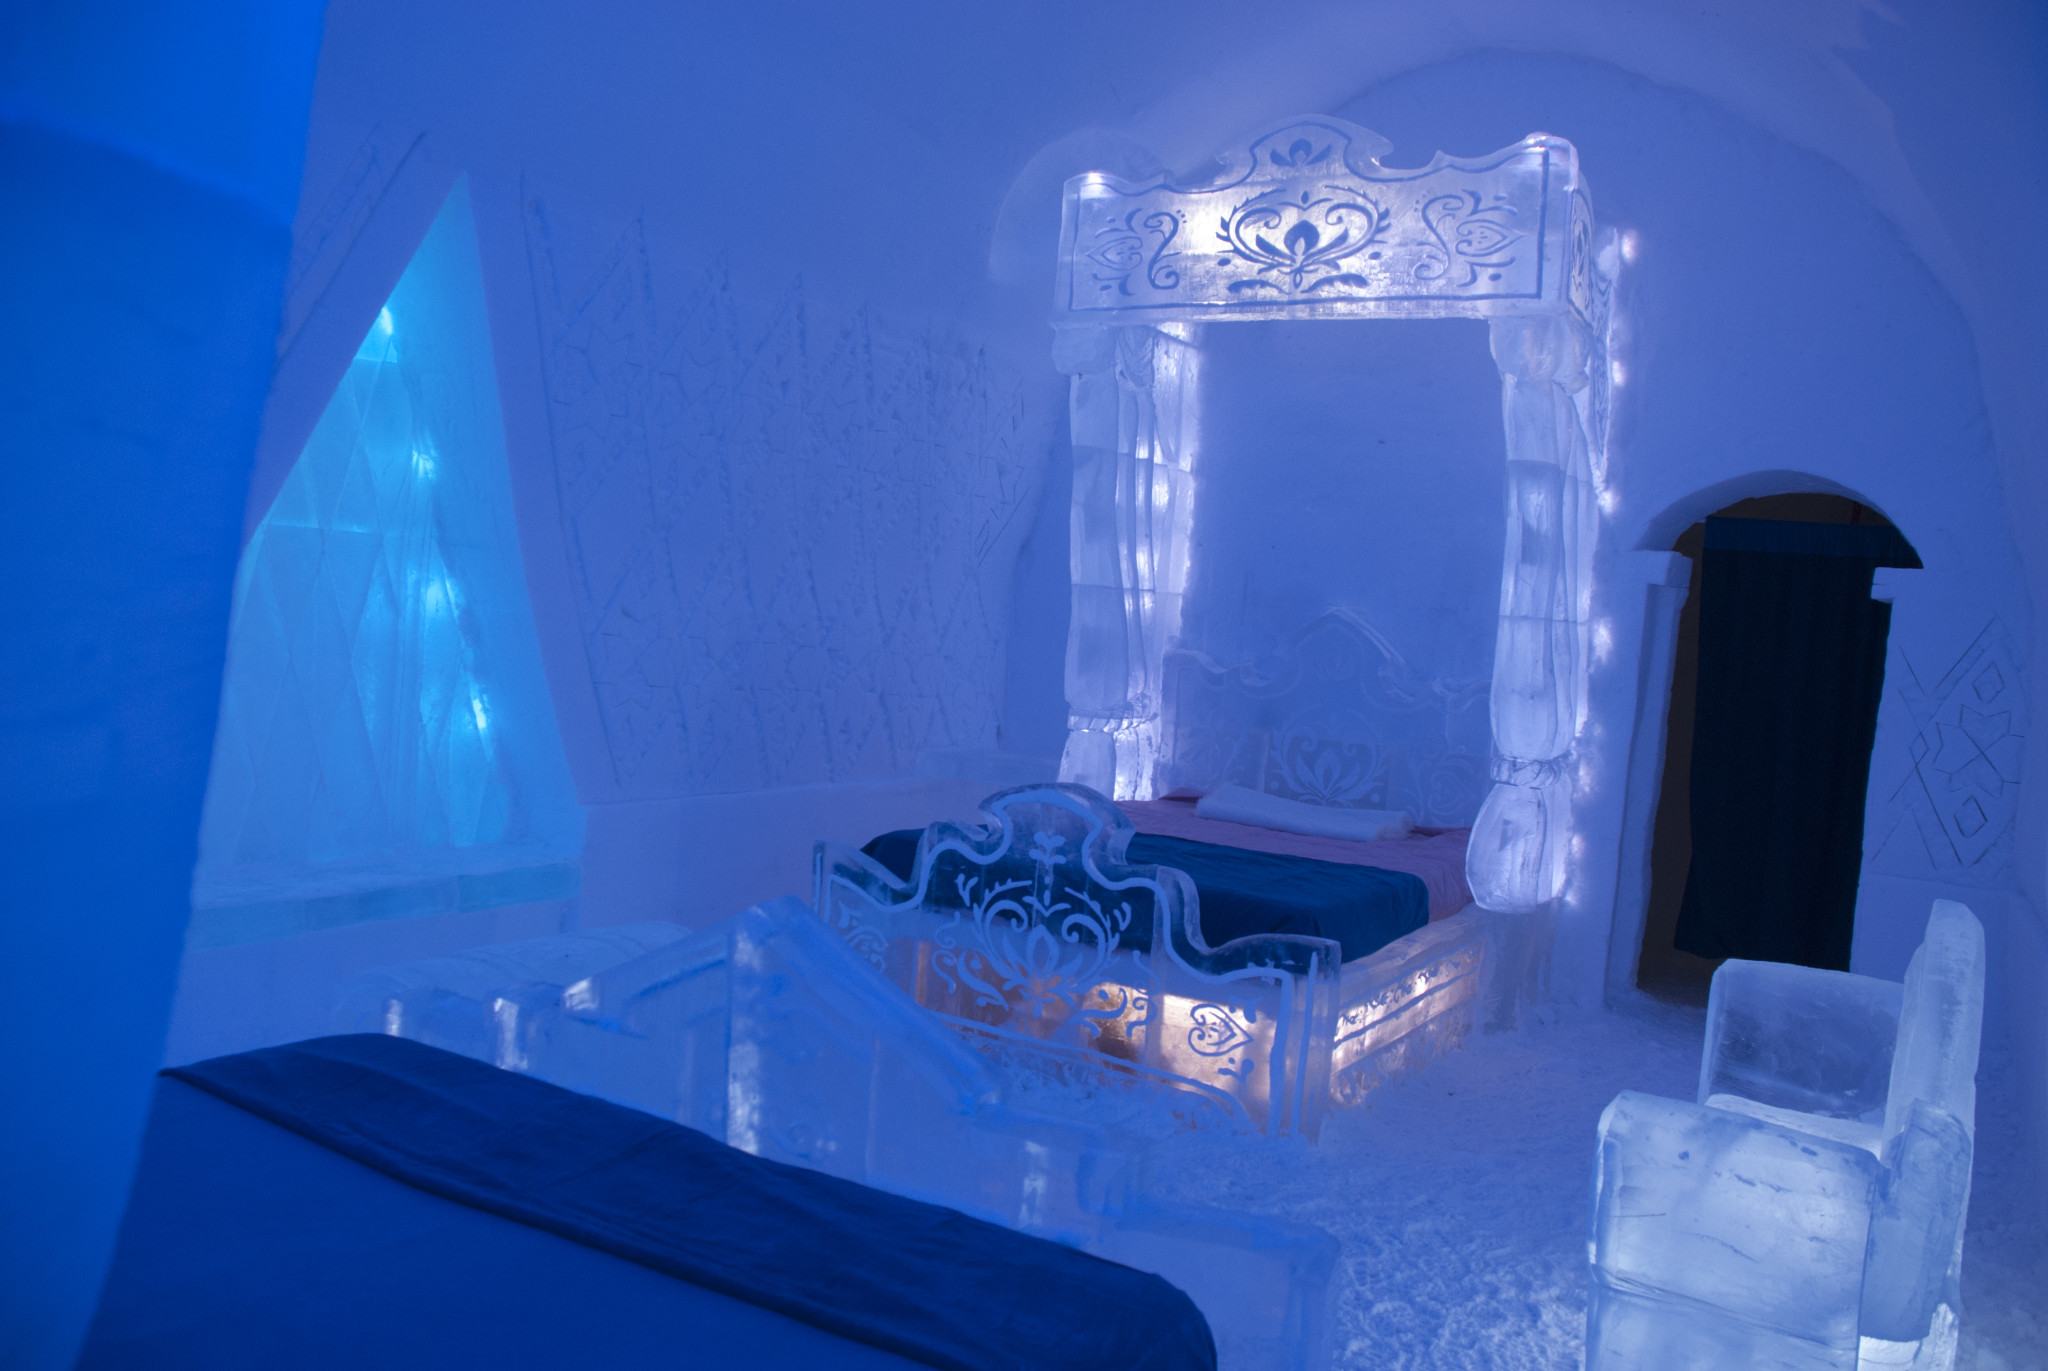 Frozen Themed Guest Suite at Hotel Quebec City’s Hotel De Glace